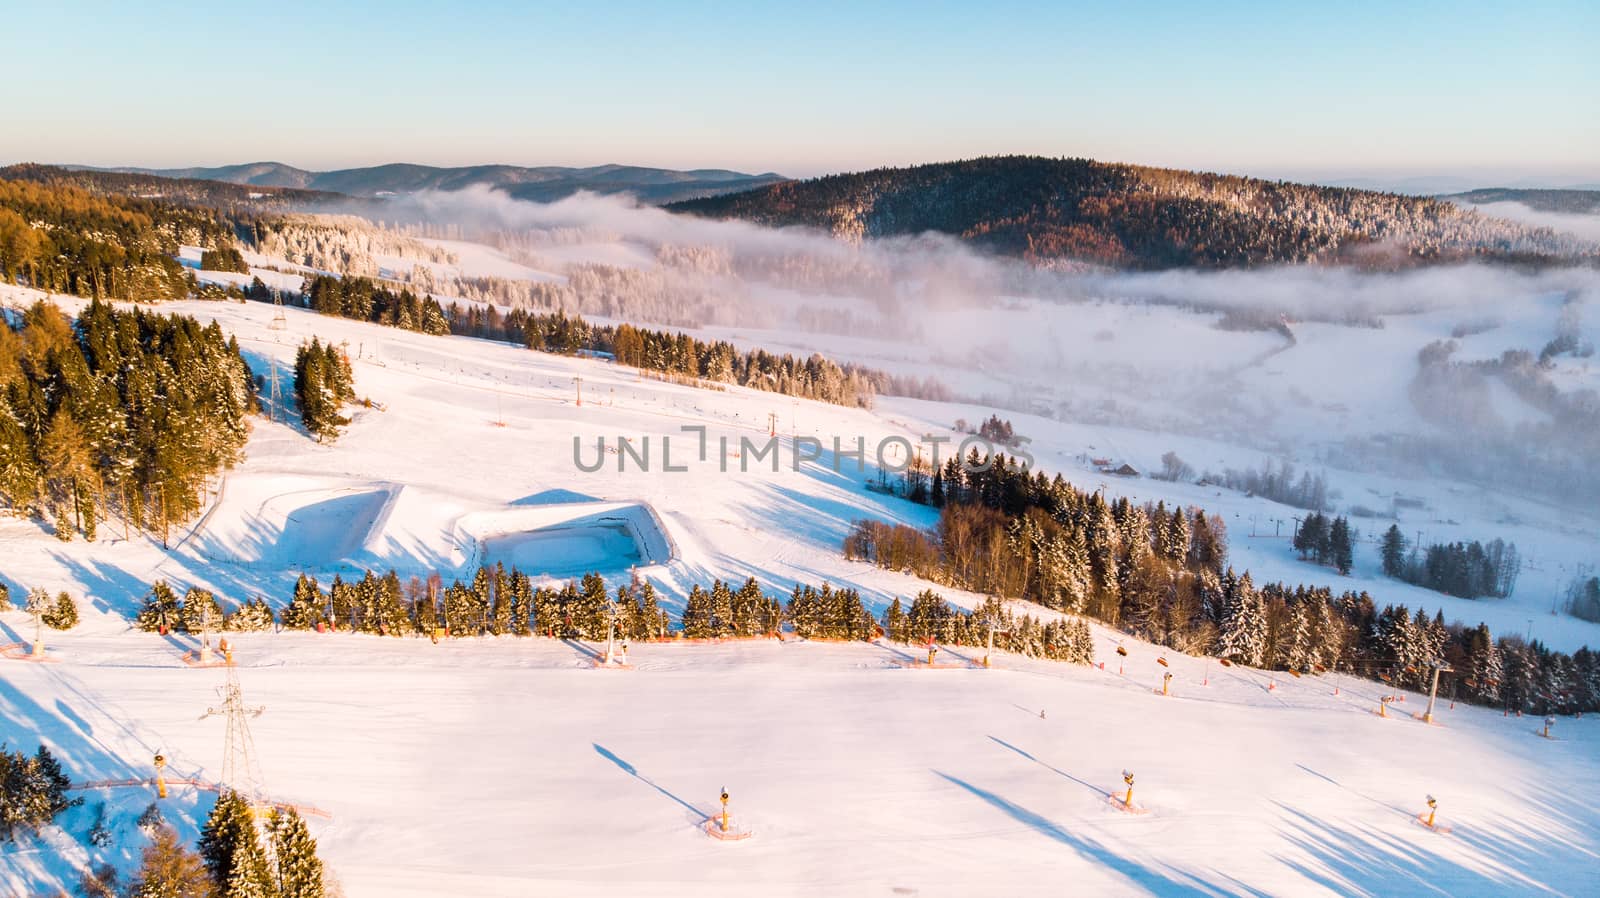 Slotwina Ski Lift near Krynica in Poland at Sunrise in Winter Se by merc67